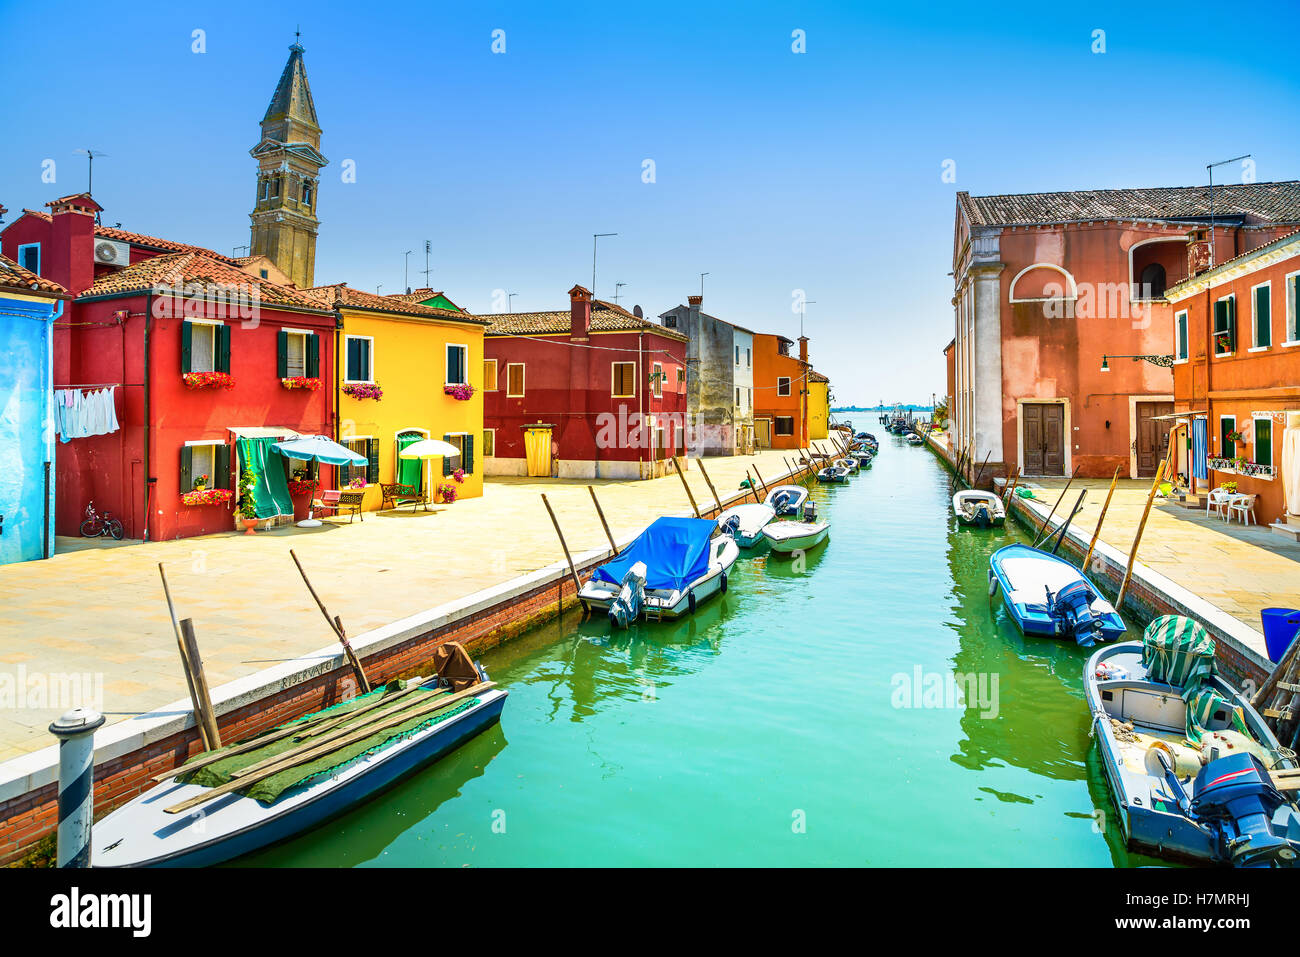 Venice landmark, Burano island canal, colorful houses church and boats, Italy. Long exposure photography Stock Photo